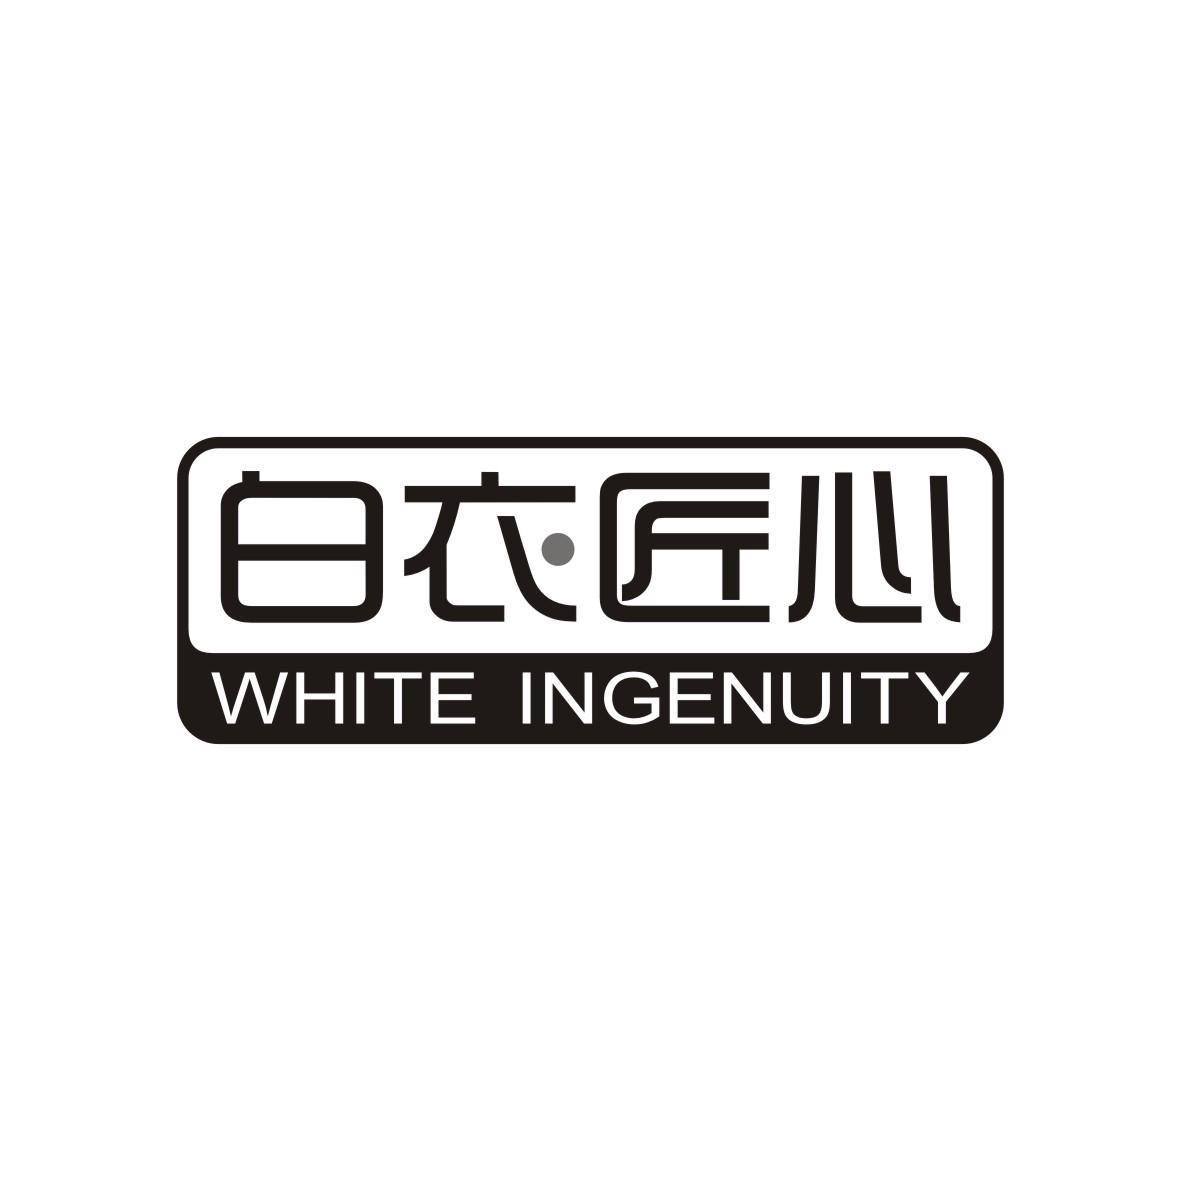 v-16527 白衣匠心 WHITE INGENUITY